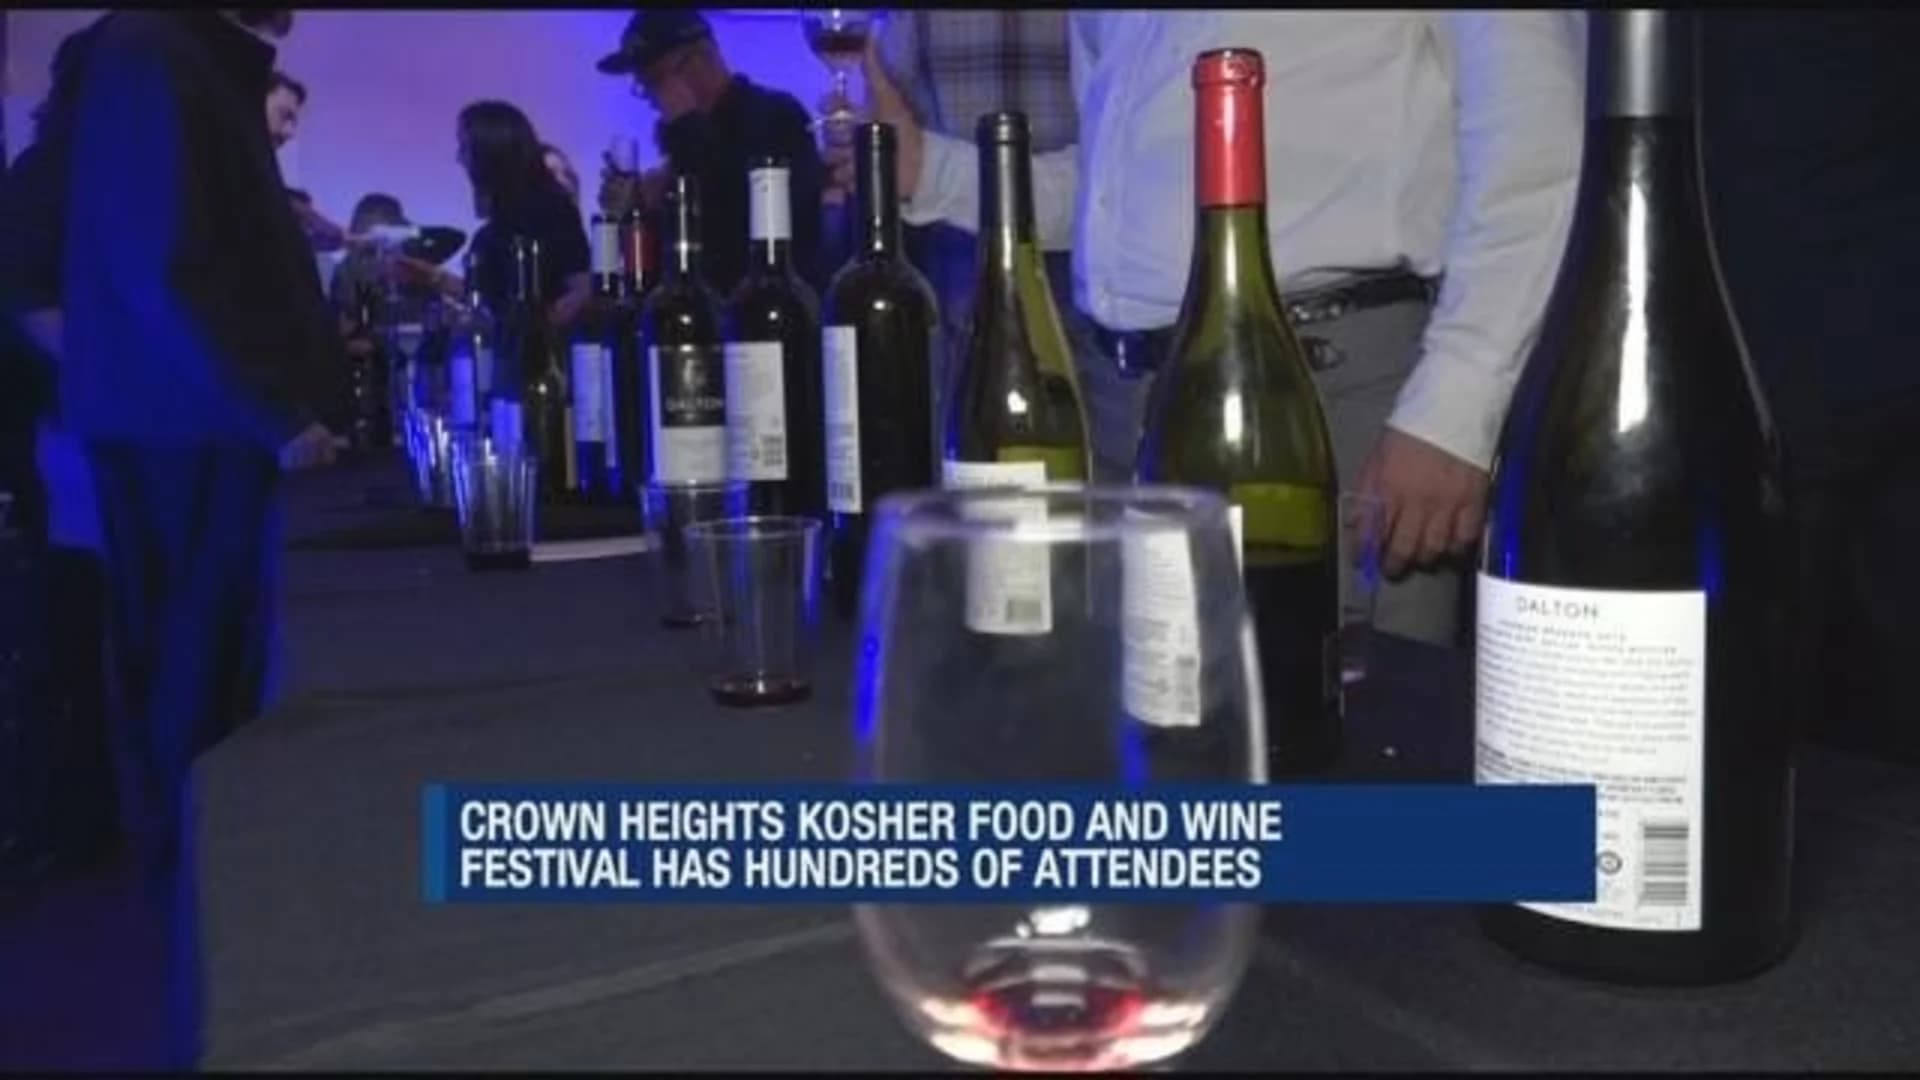 Crown Heights Kosher Wine and Food Festival held